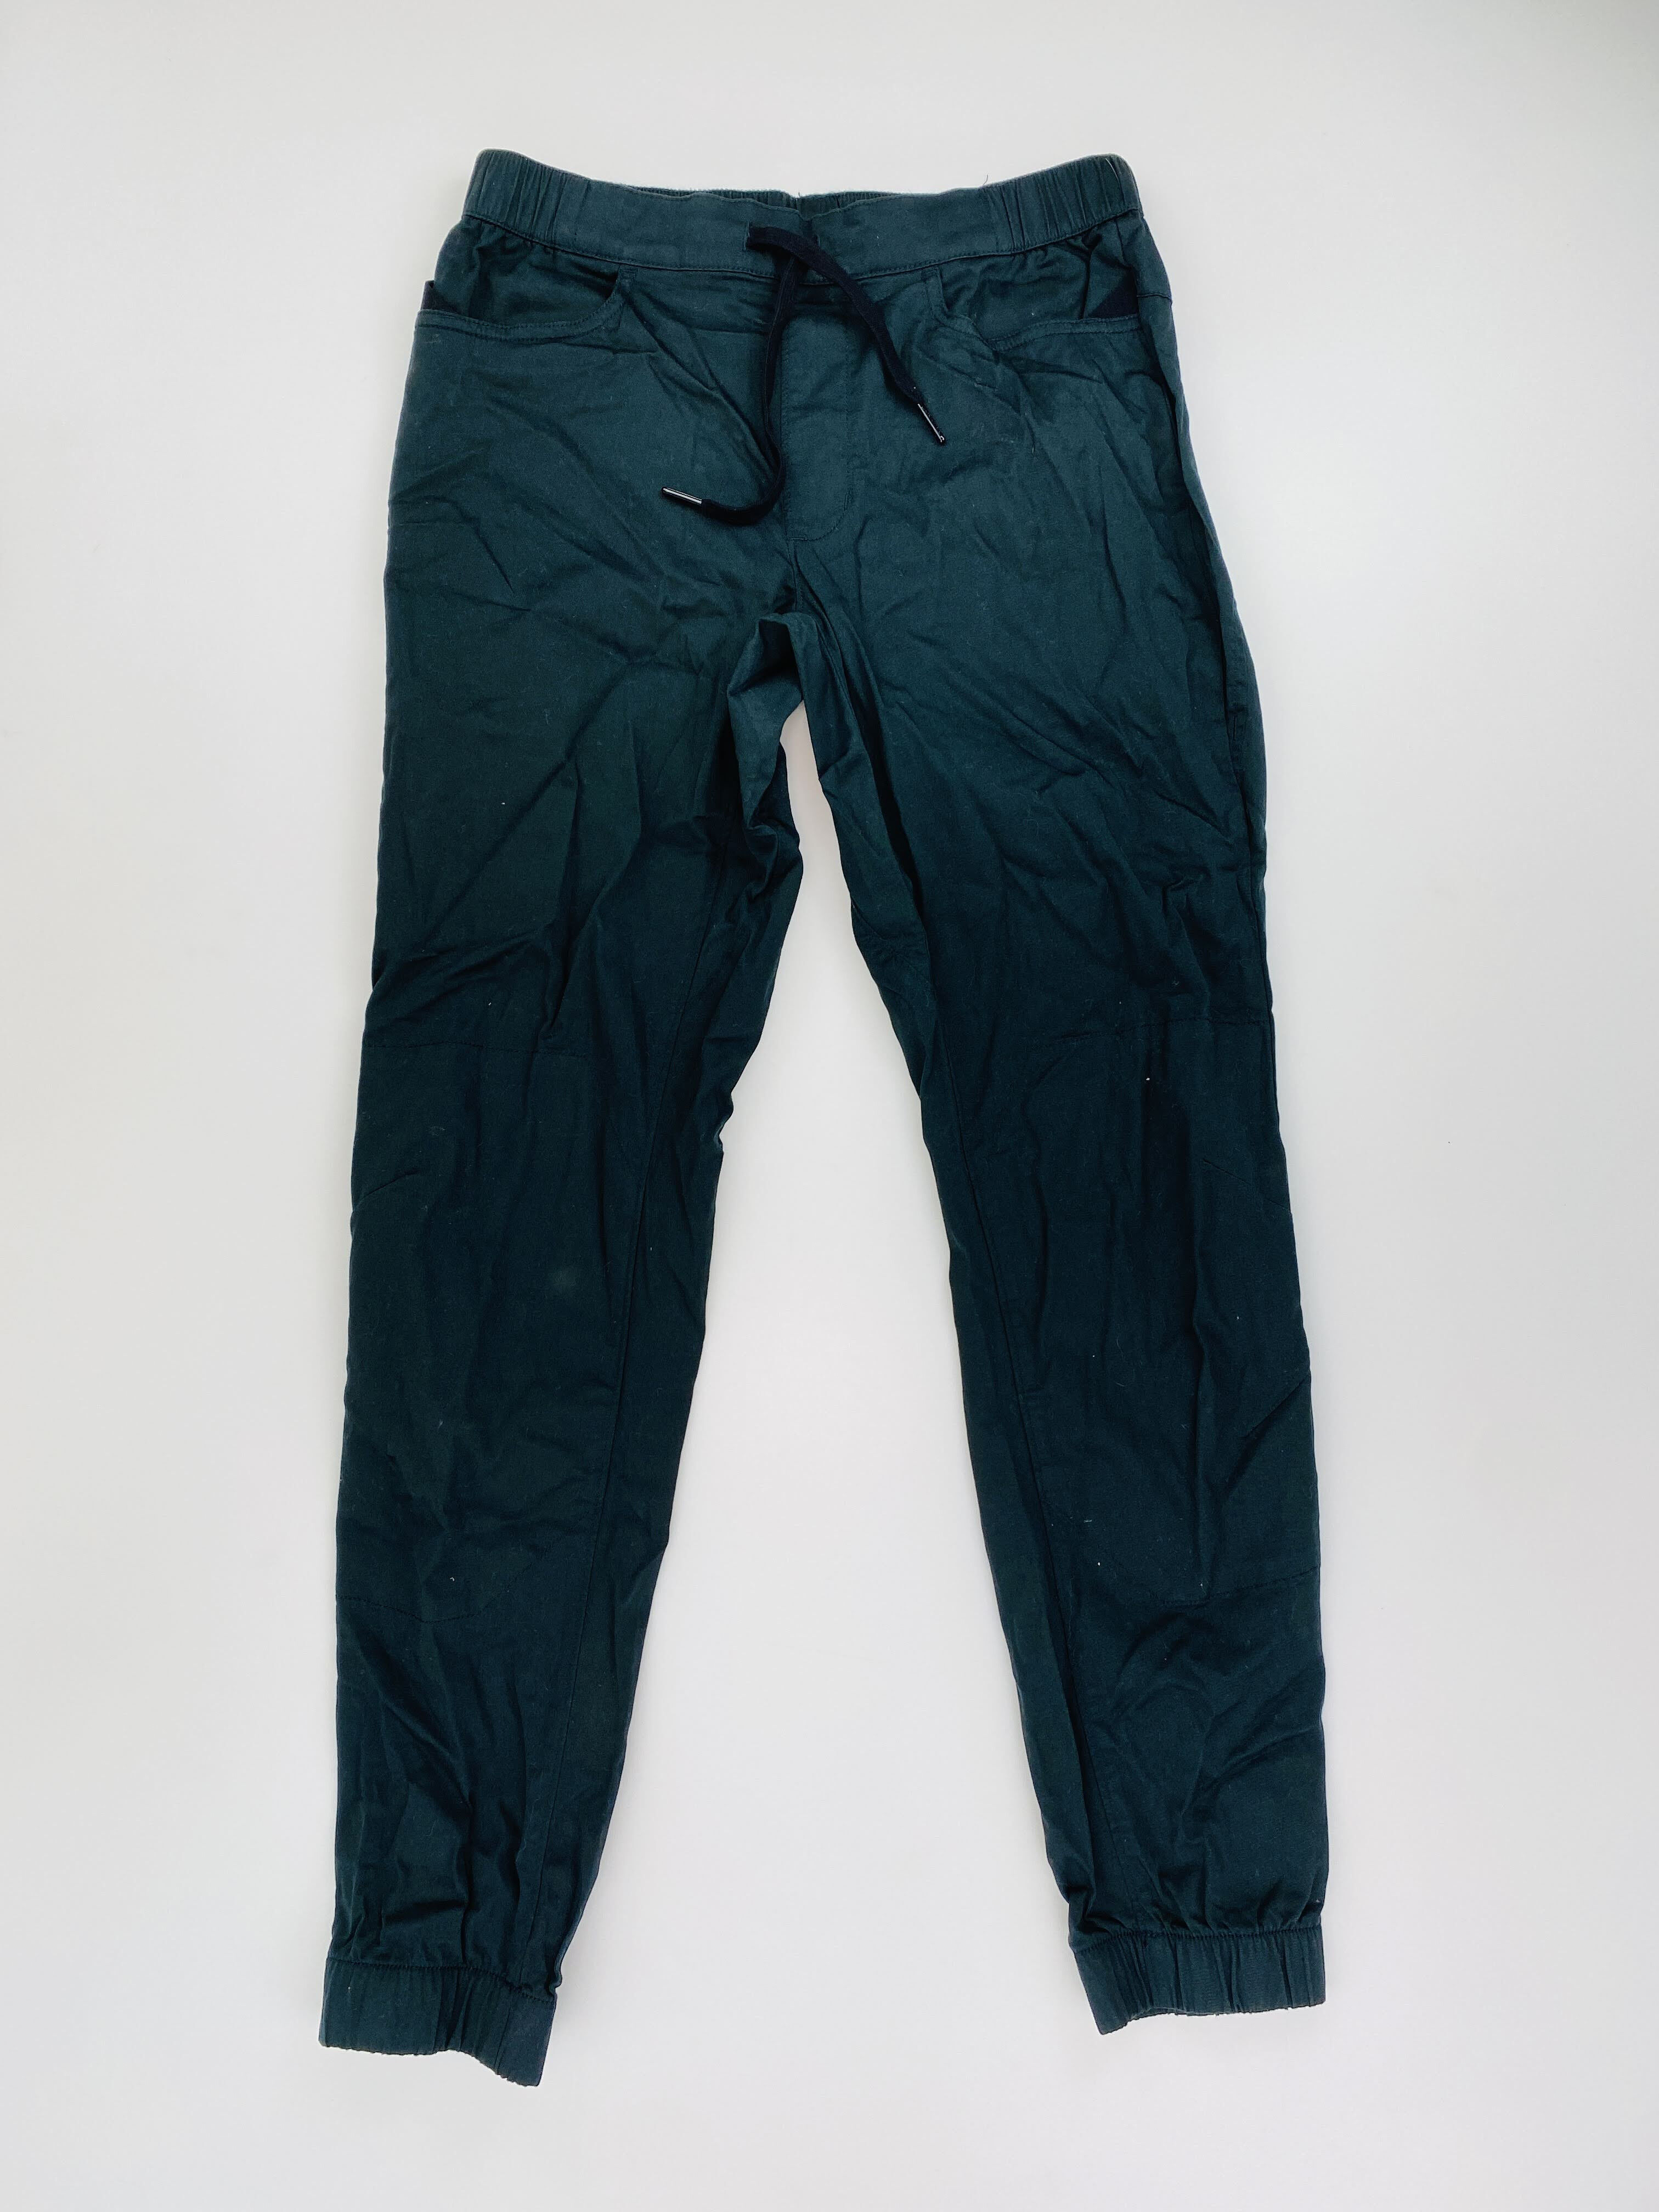 Black Diamond Notion Pants - Second Hand Trousers - Men's - Black - S | Hardloop